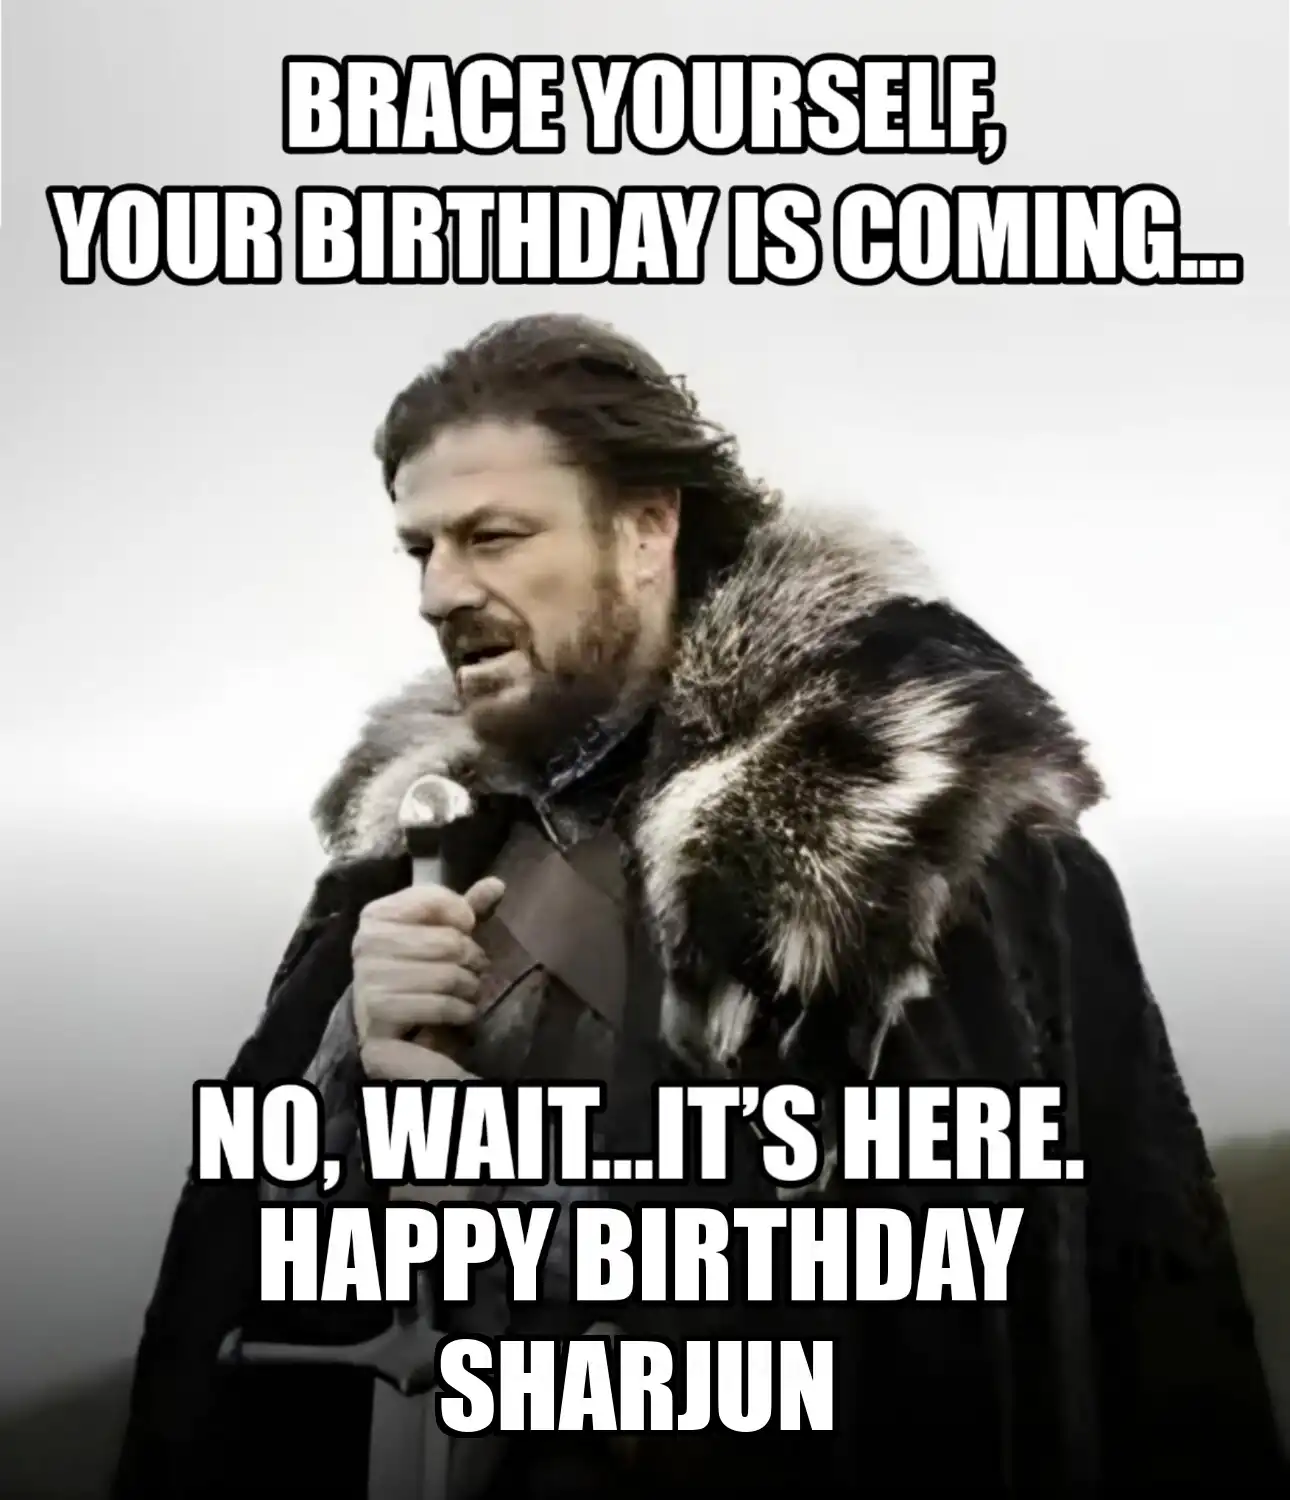 Happy Birthday Sharjun Brace Yourself Your Birthday Is Coming Meme